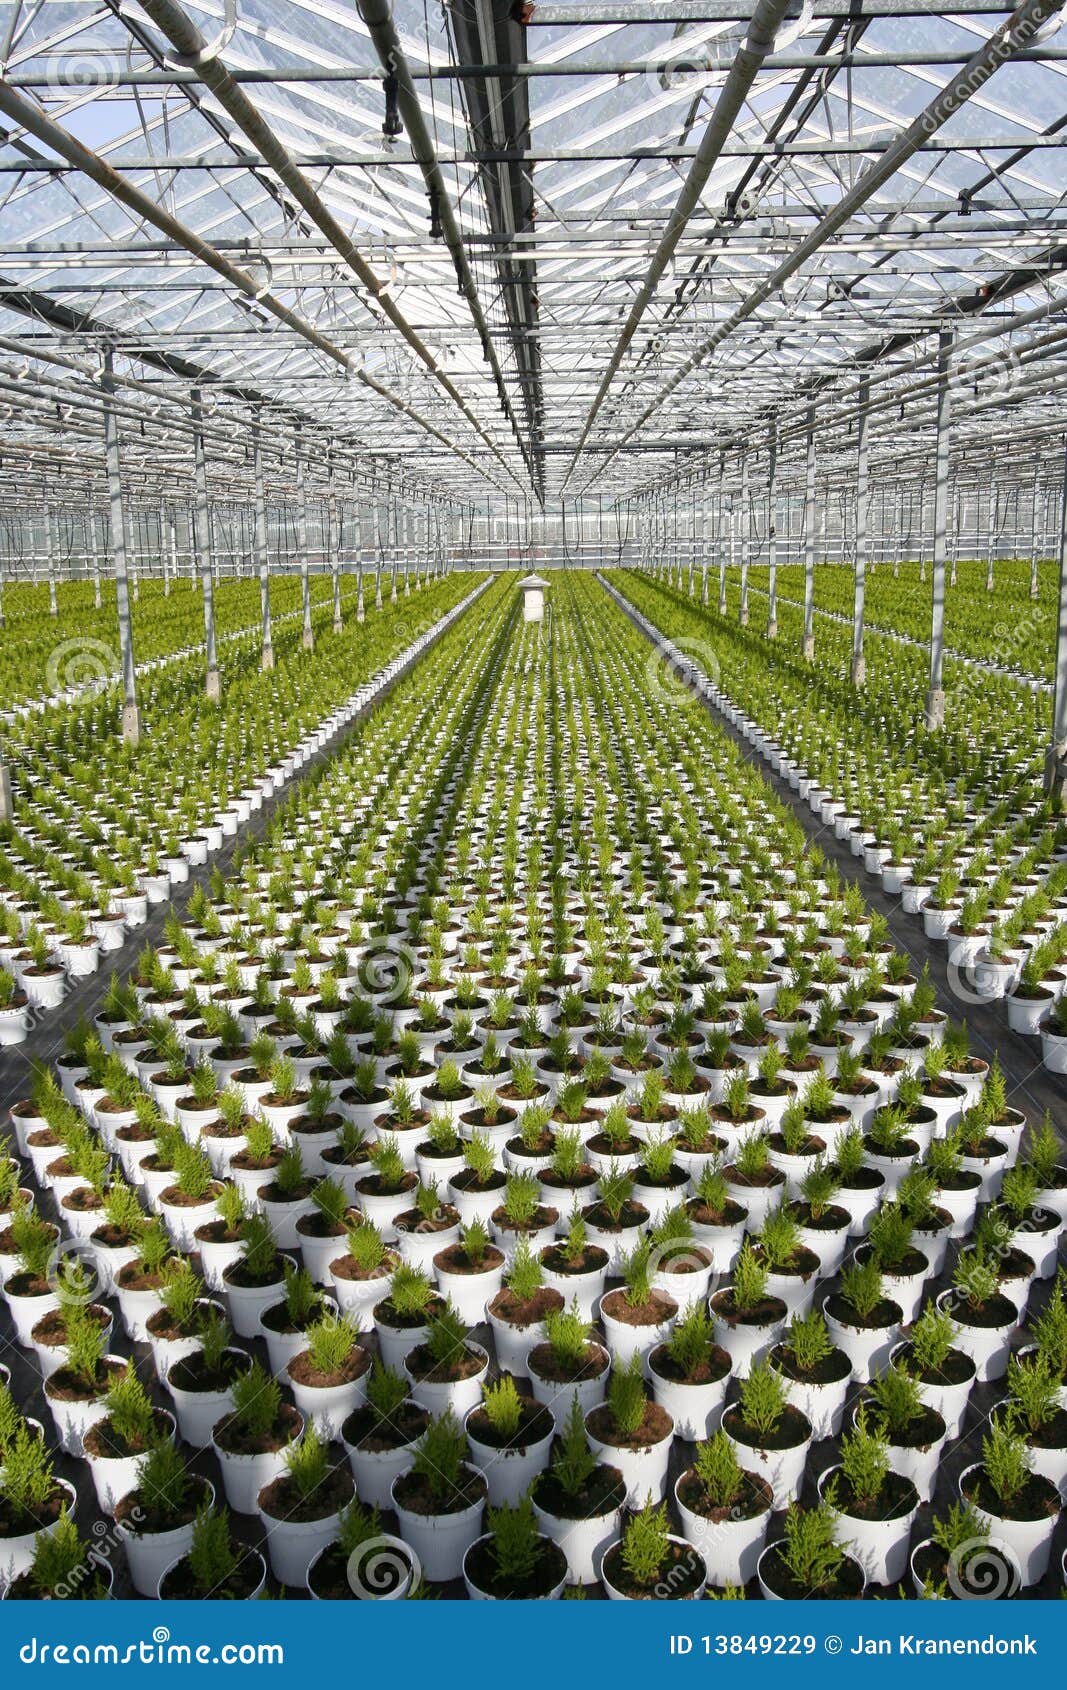 greenhouse conifers